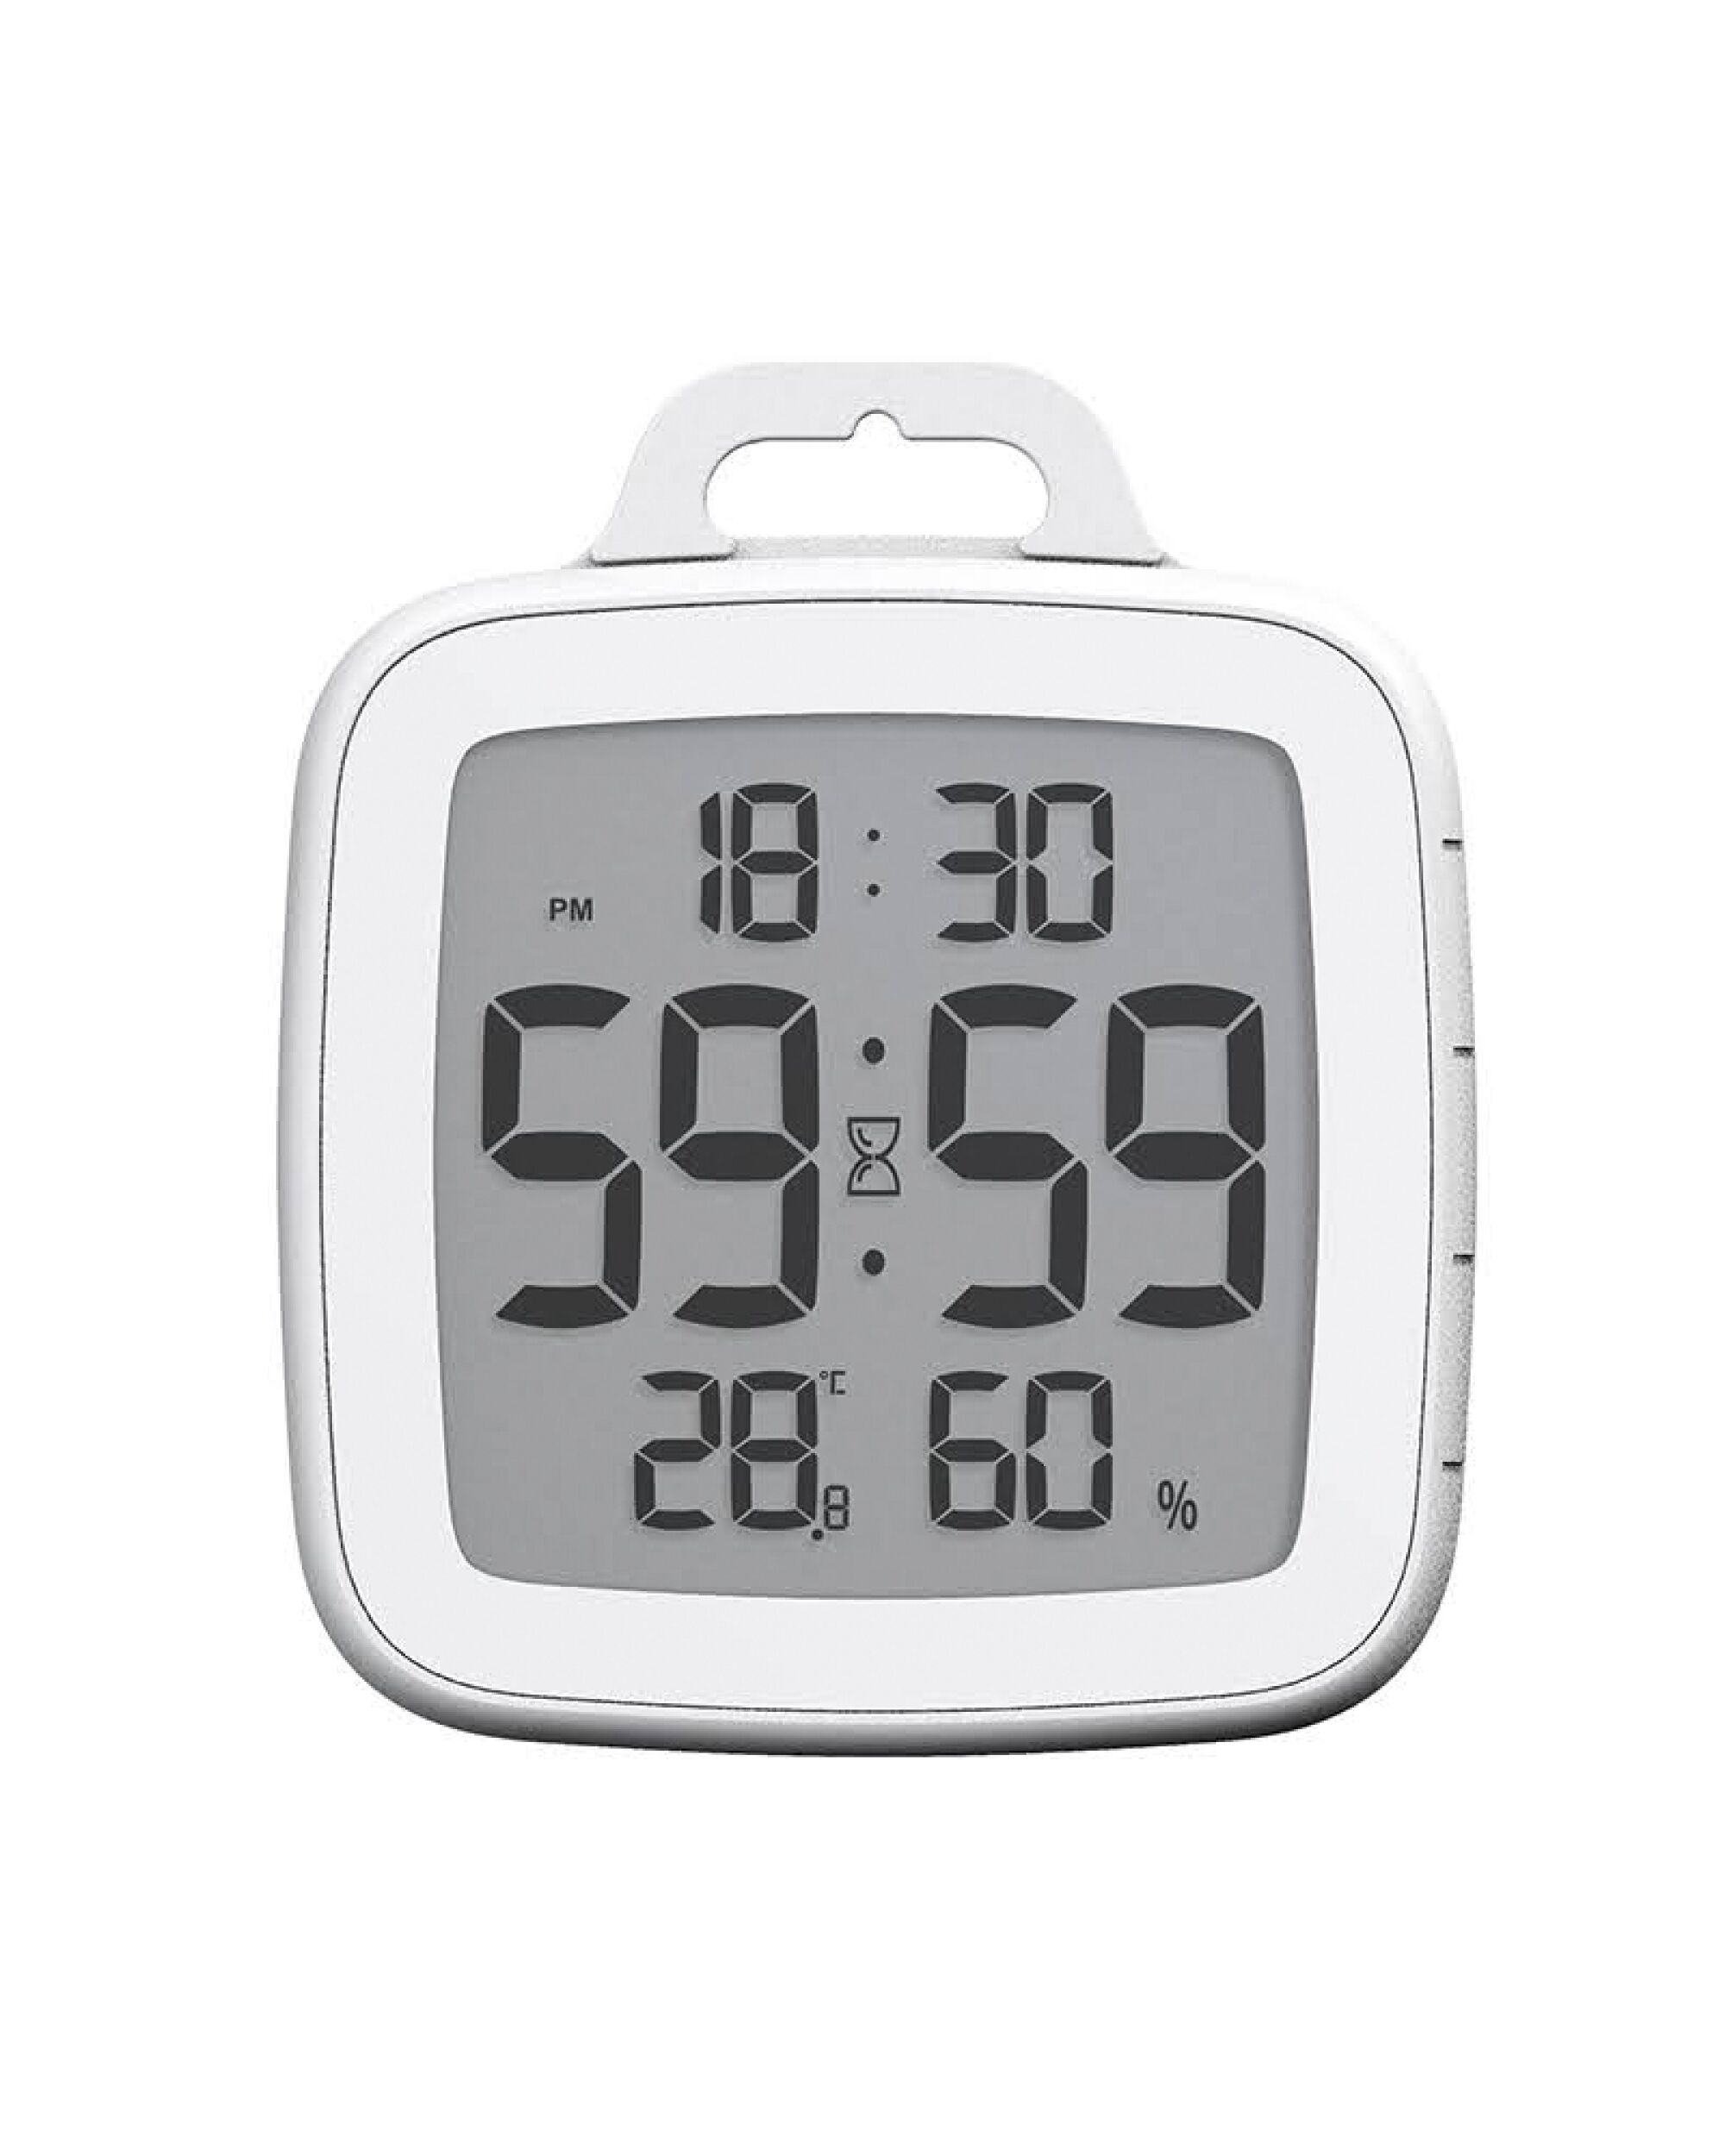 A waterproof digital shower timer/clock from Baldr Electronic